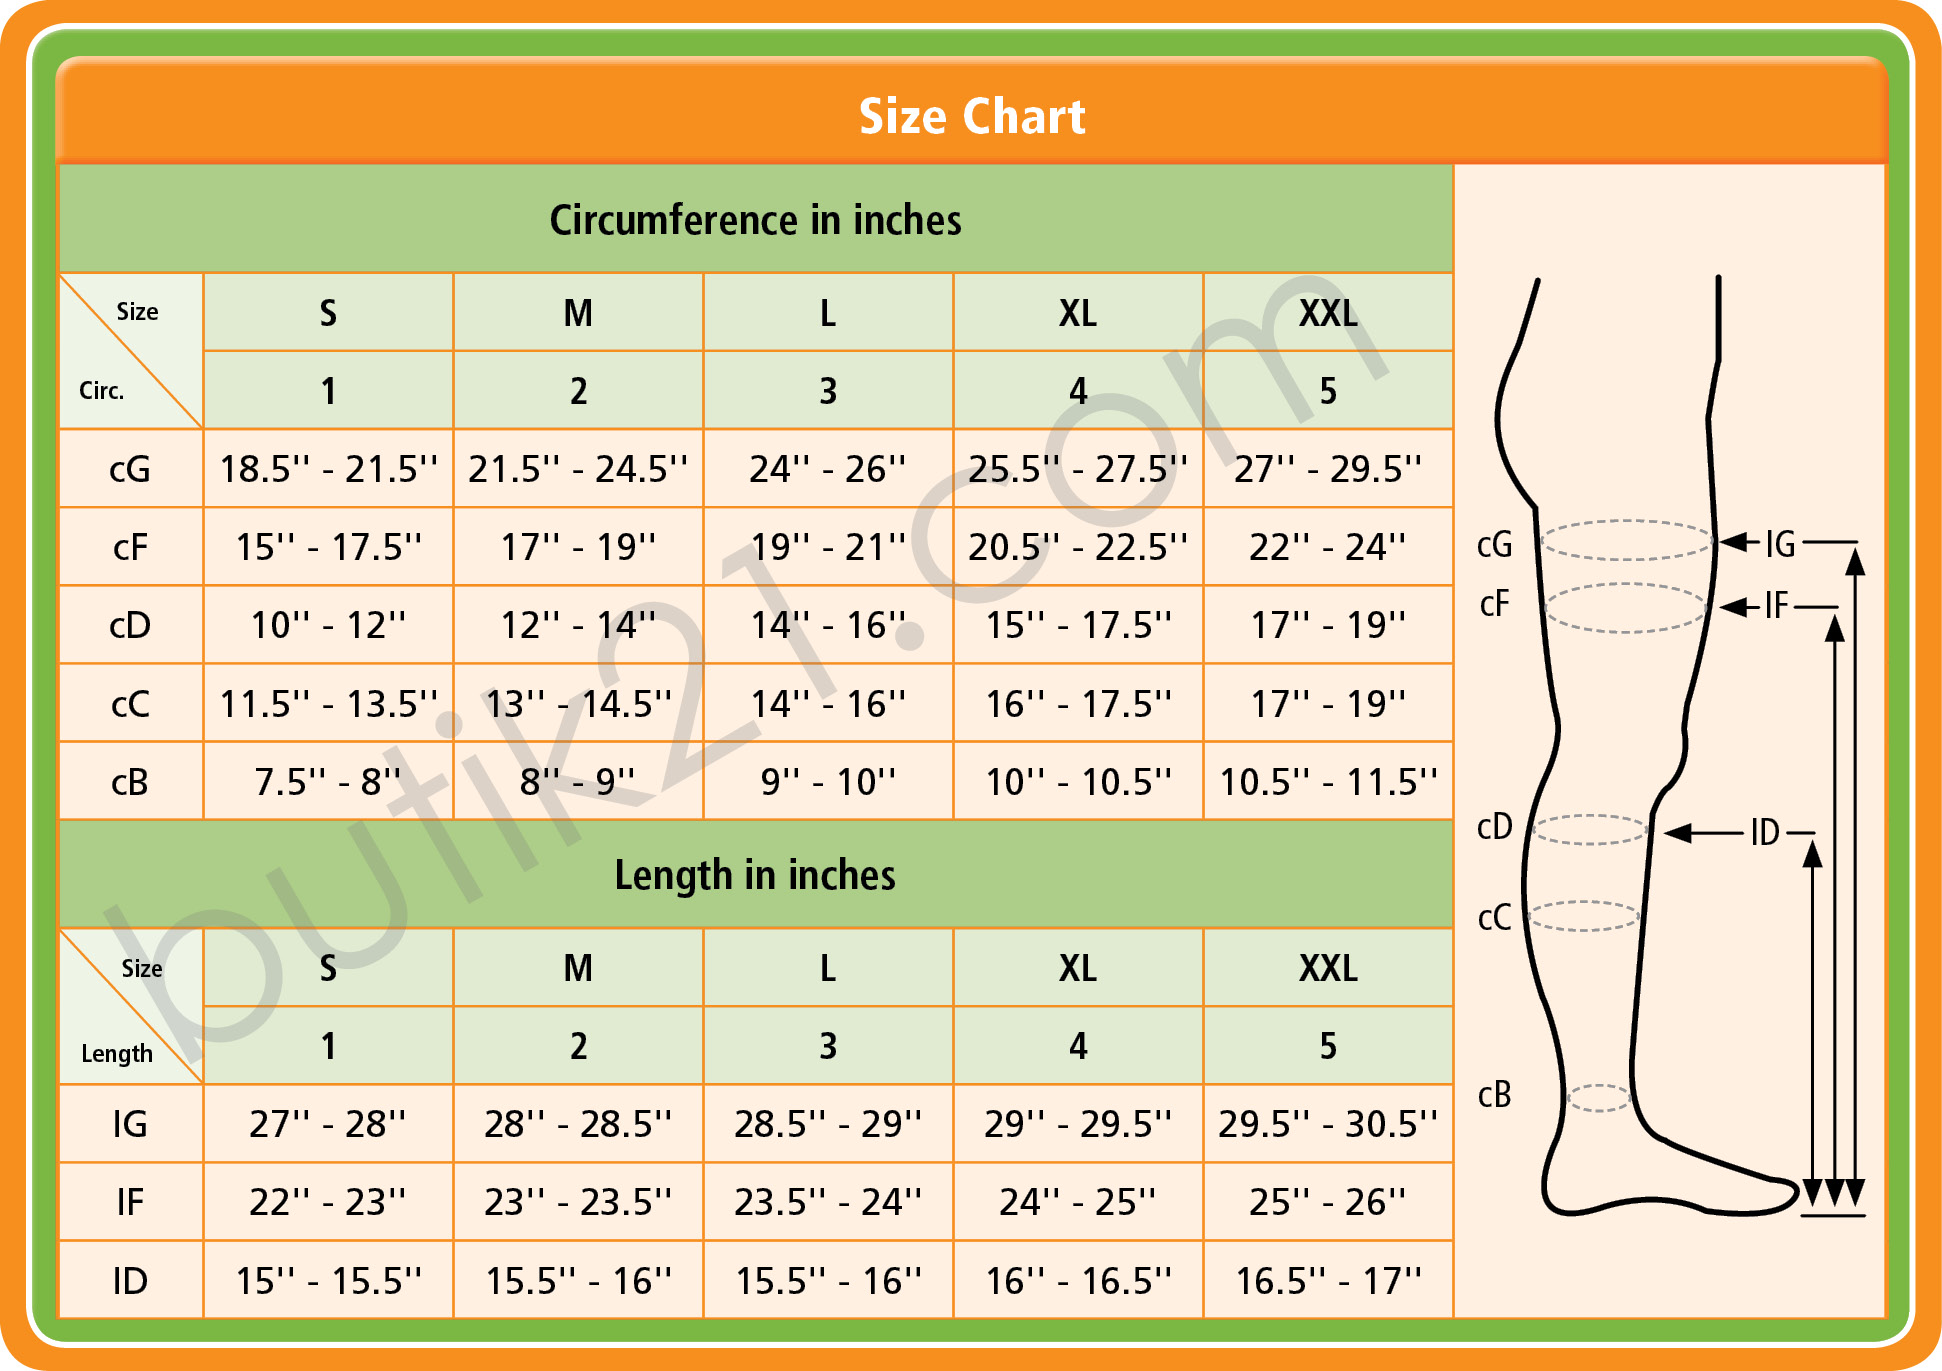 Legging Sizes Chart